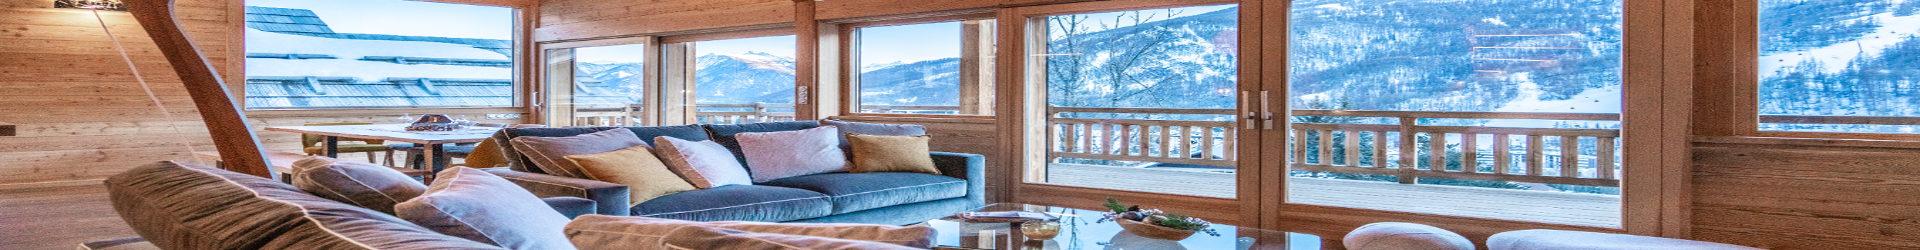 serre-chevalier-briancon-montagne-ski-location-vacances-hiver-neige-chalet-appartement